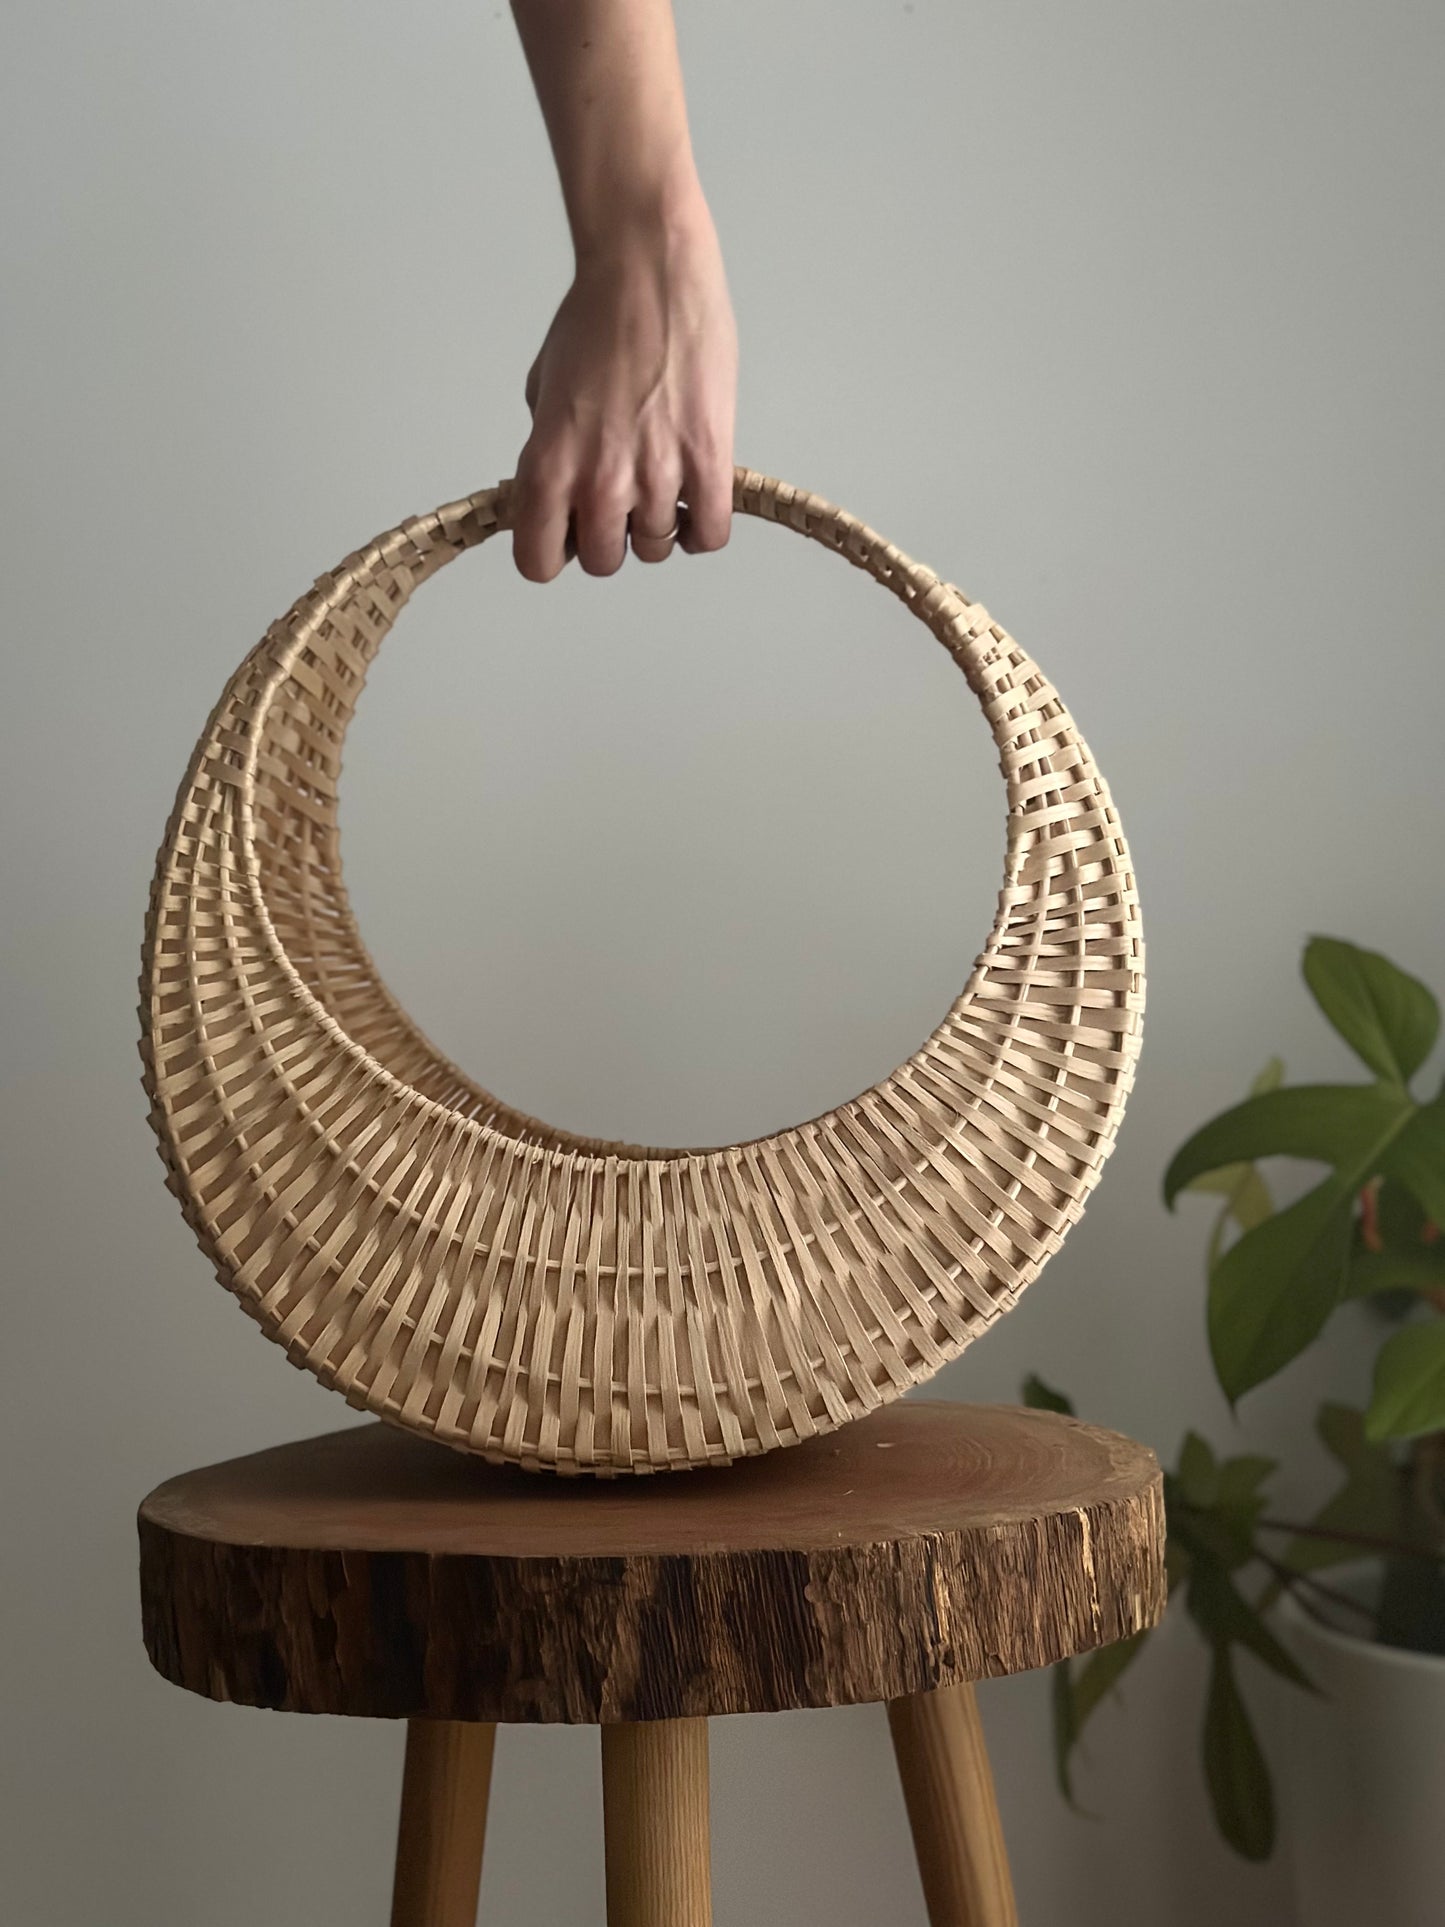 Waxing Crescent Basket Sculpture